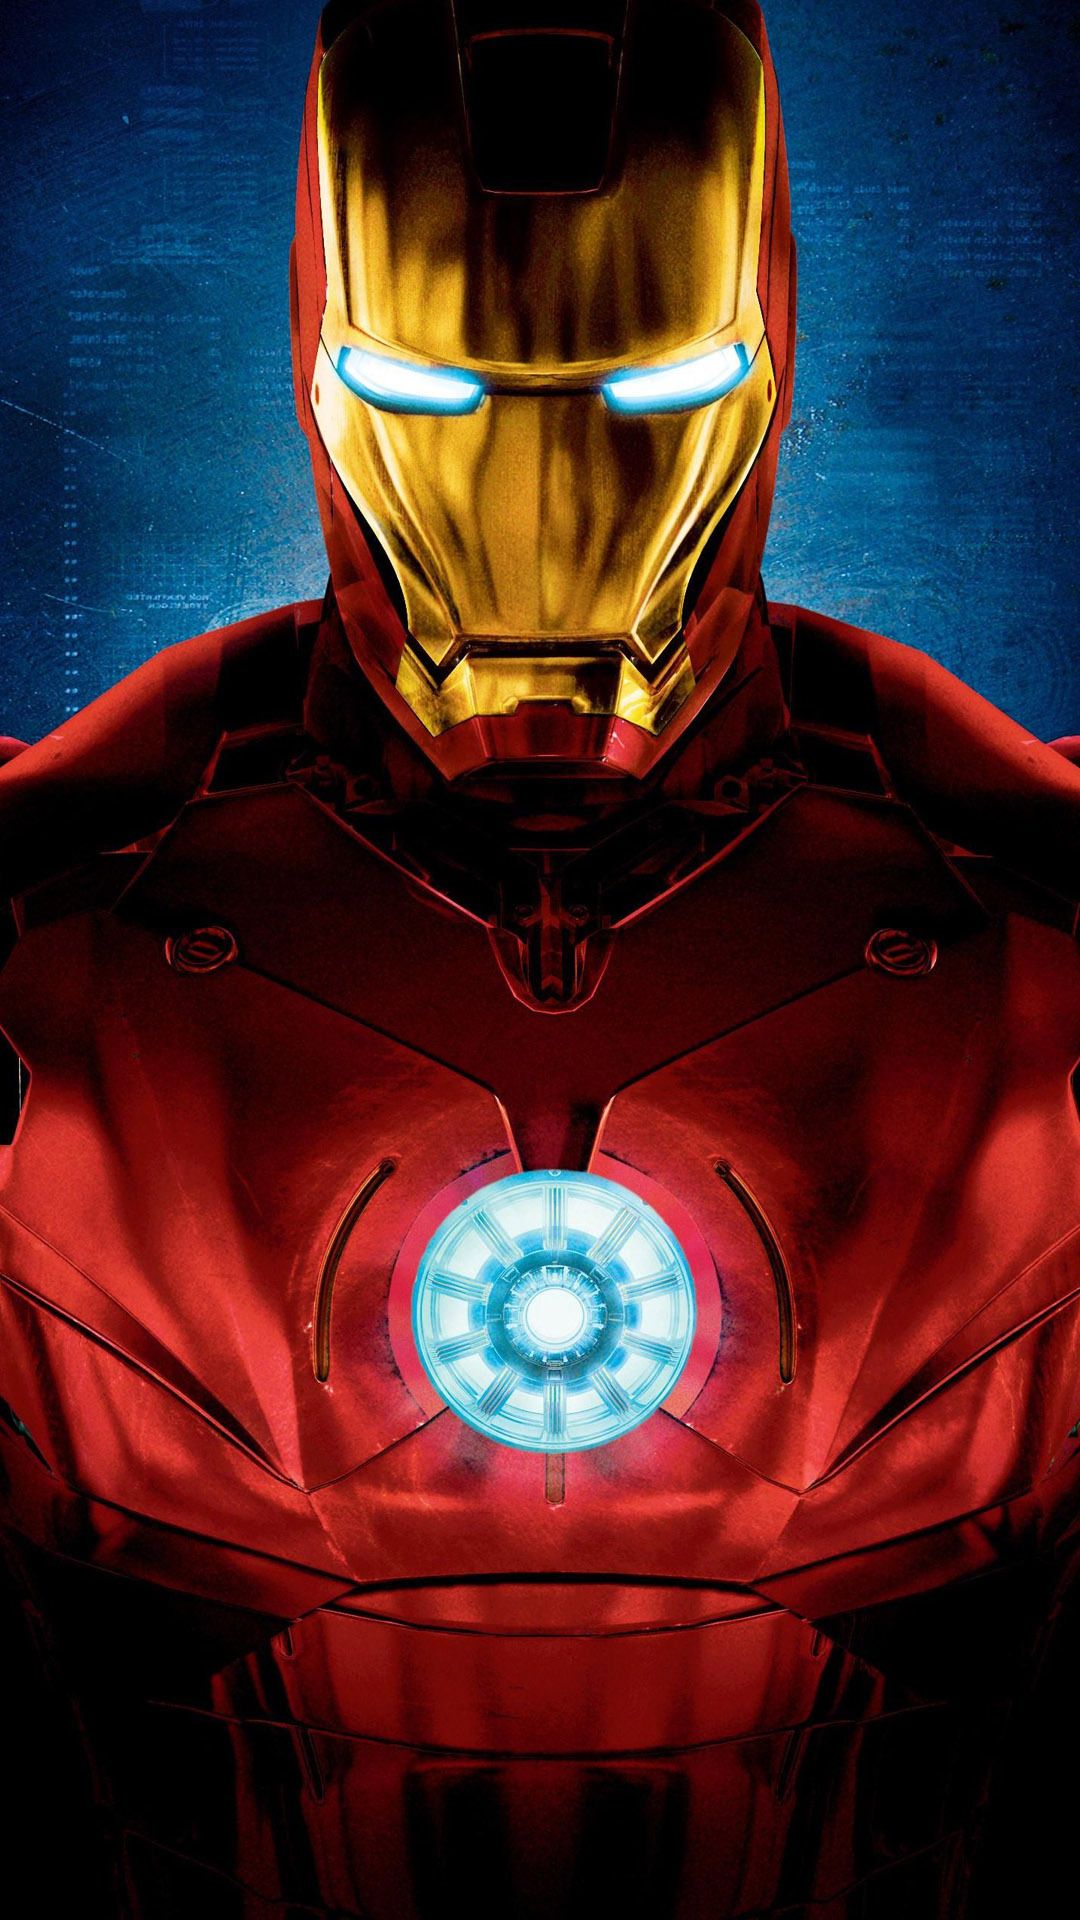 Iron Man Face Mask - wallpaper.